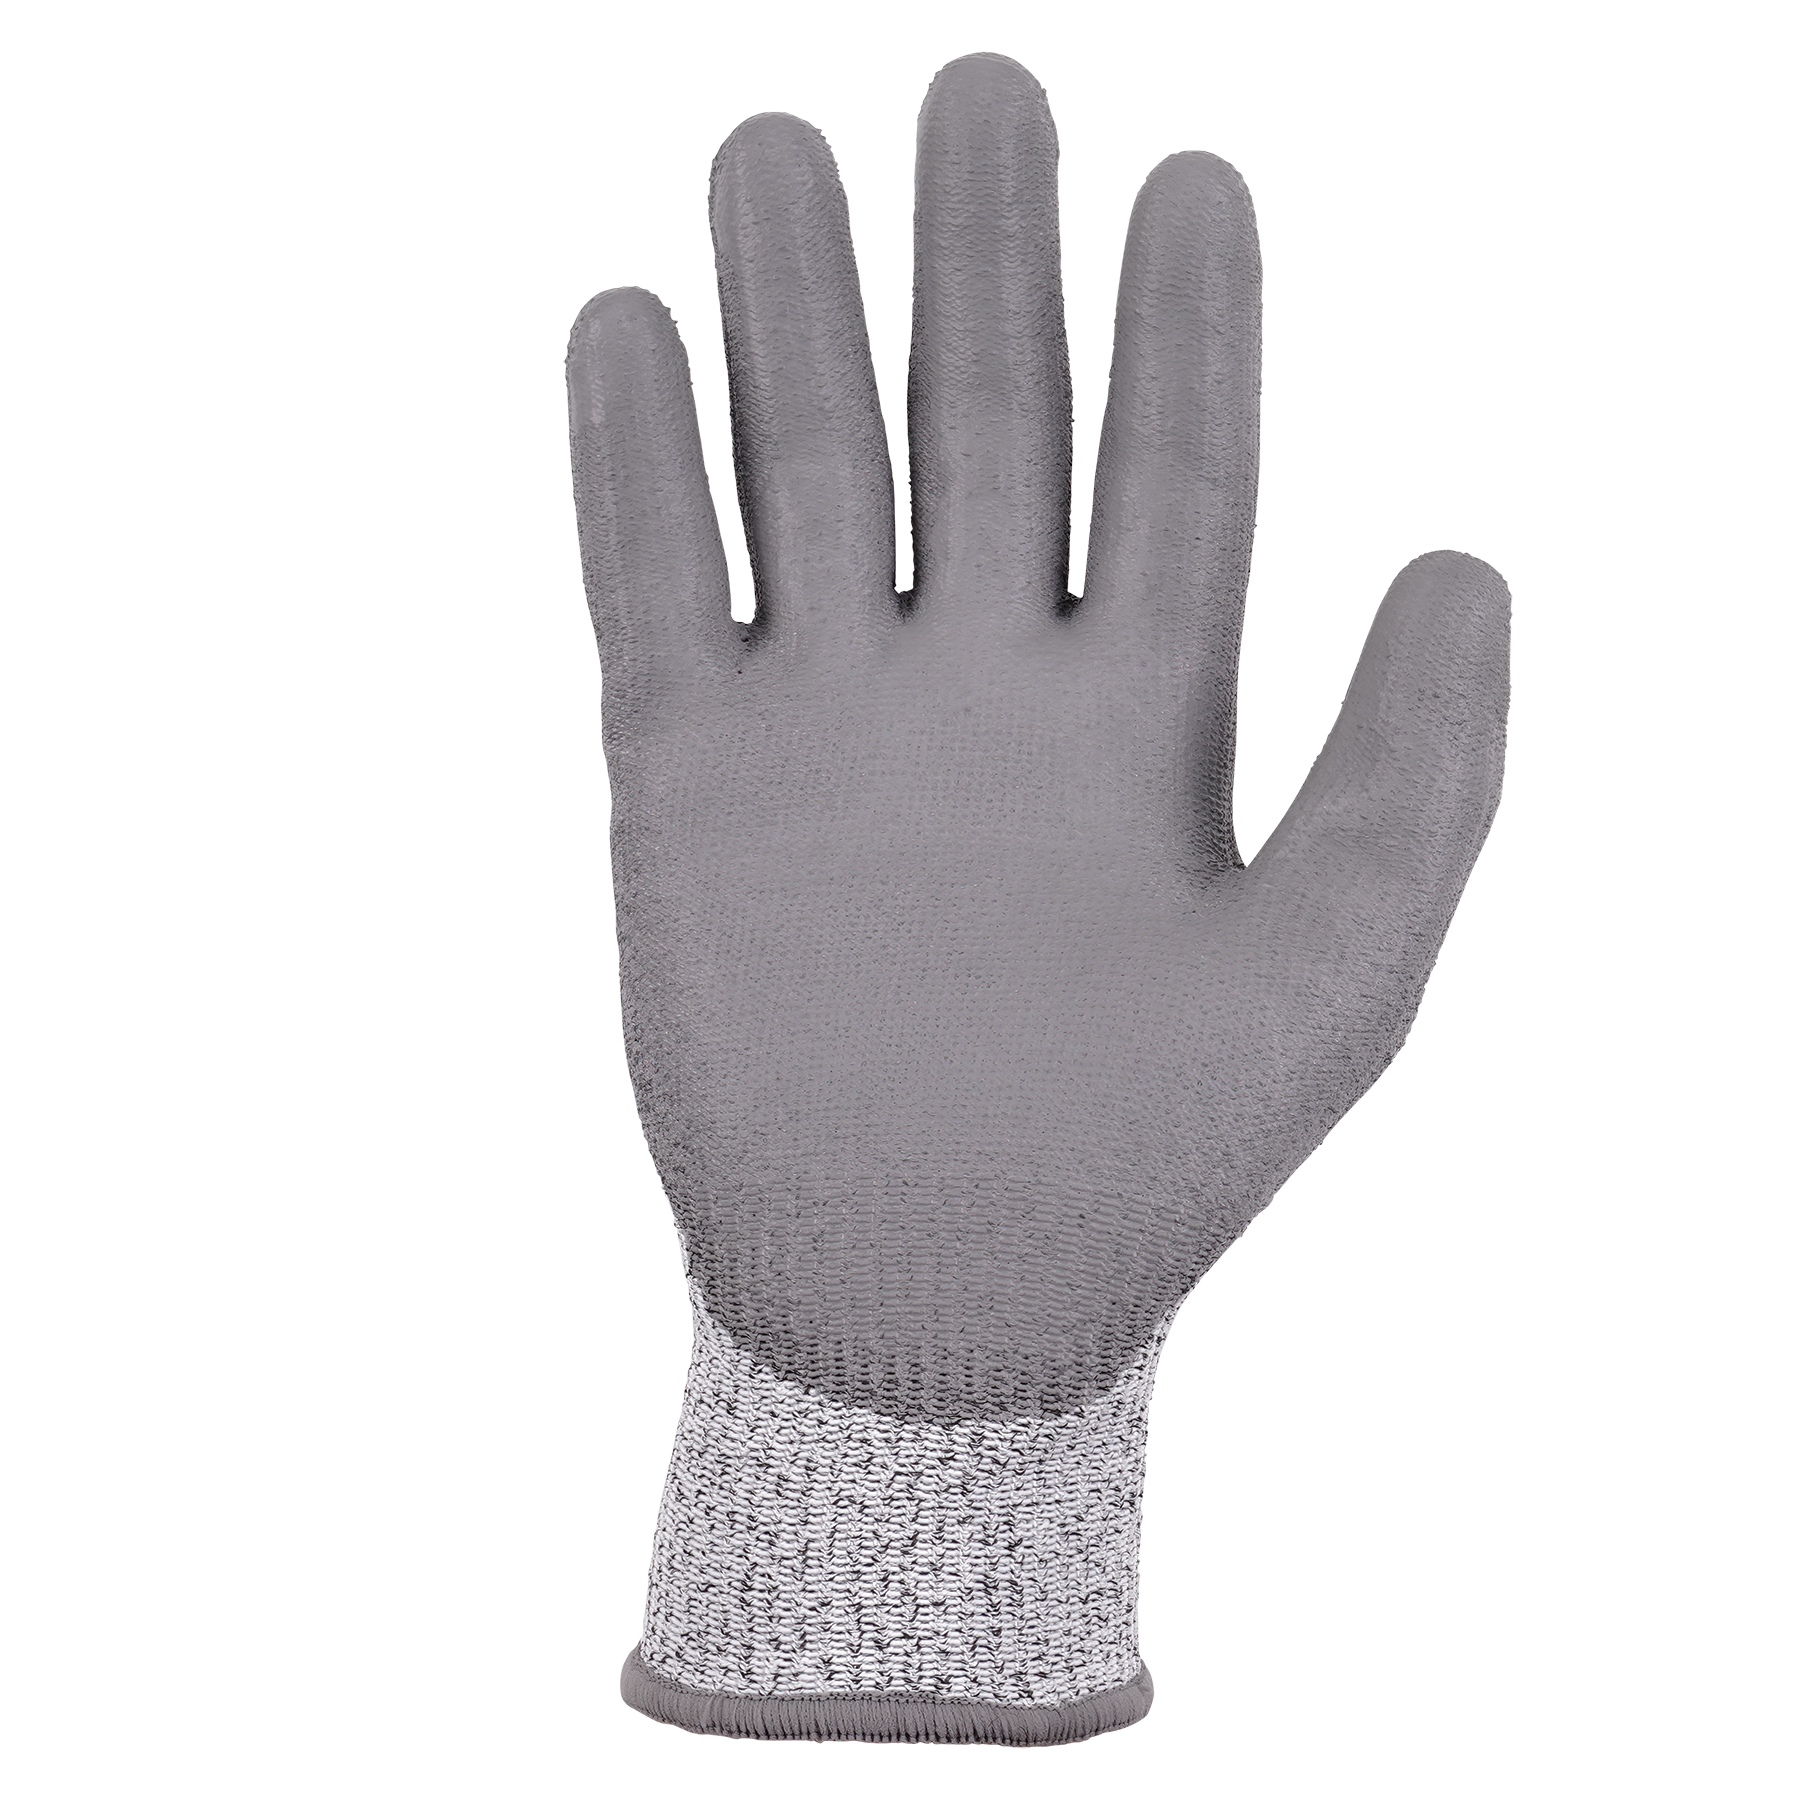 https://www.ergodyne.com/sites/default/files/product-images/10462-7030-ansi-a3-pu-coated-cr-gloves-grey-palm_0.jpg